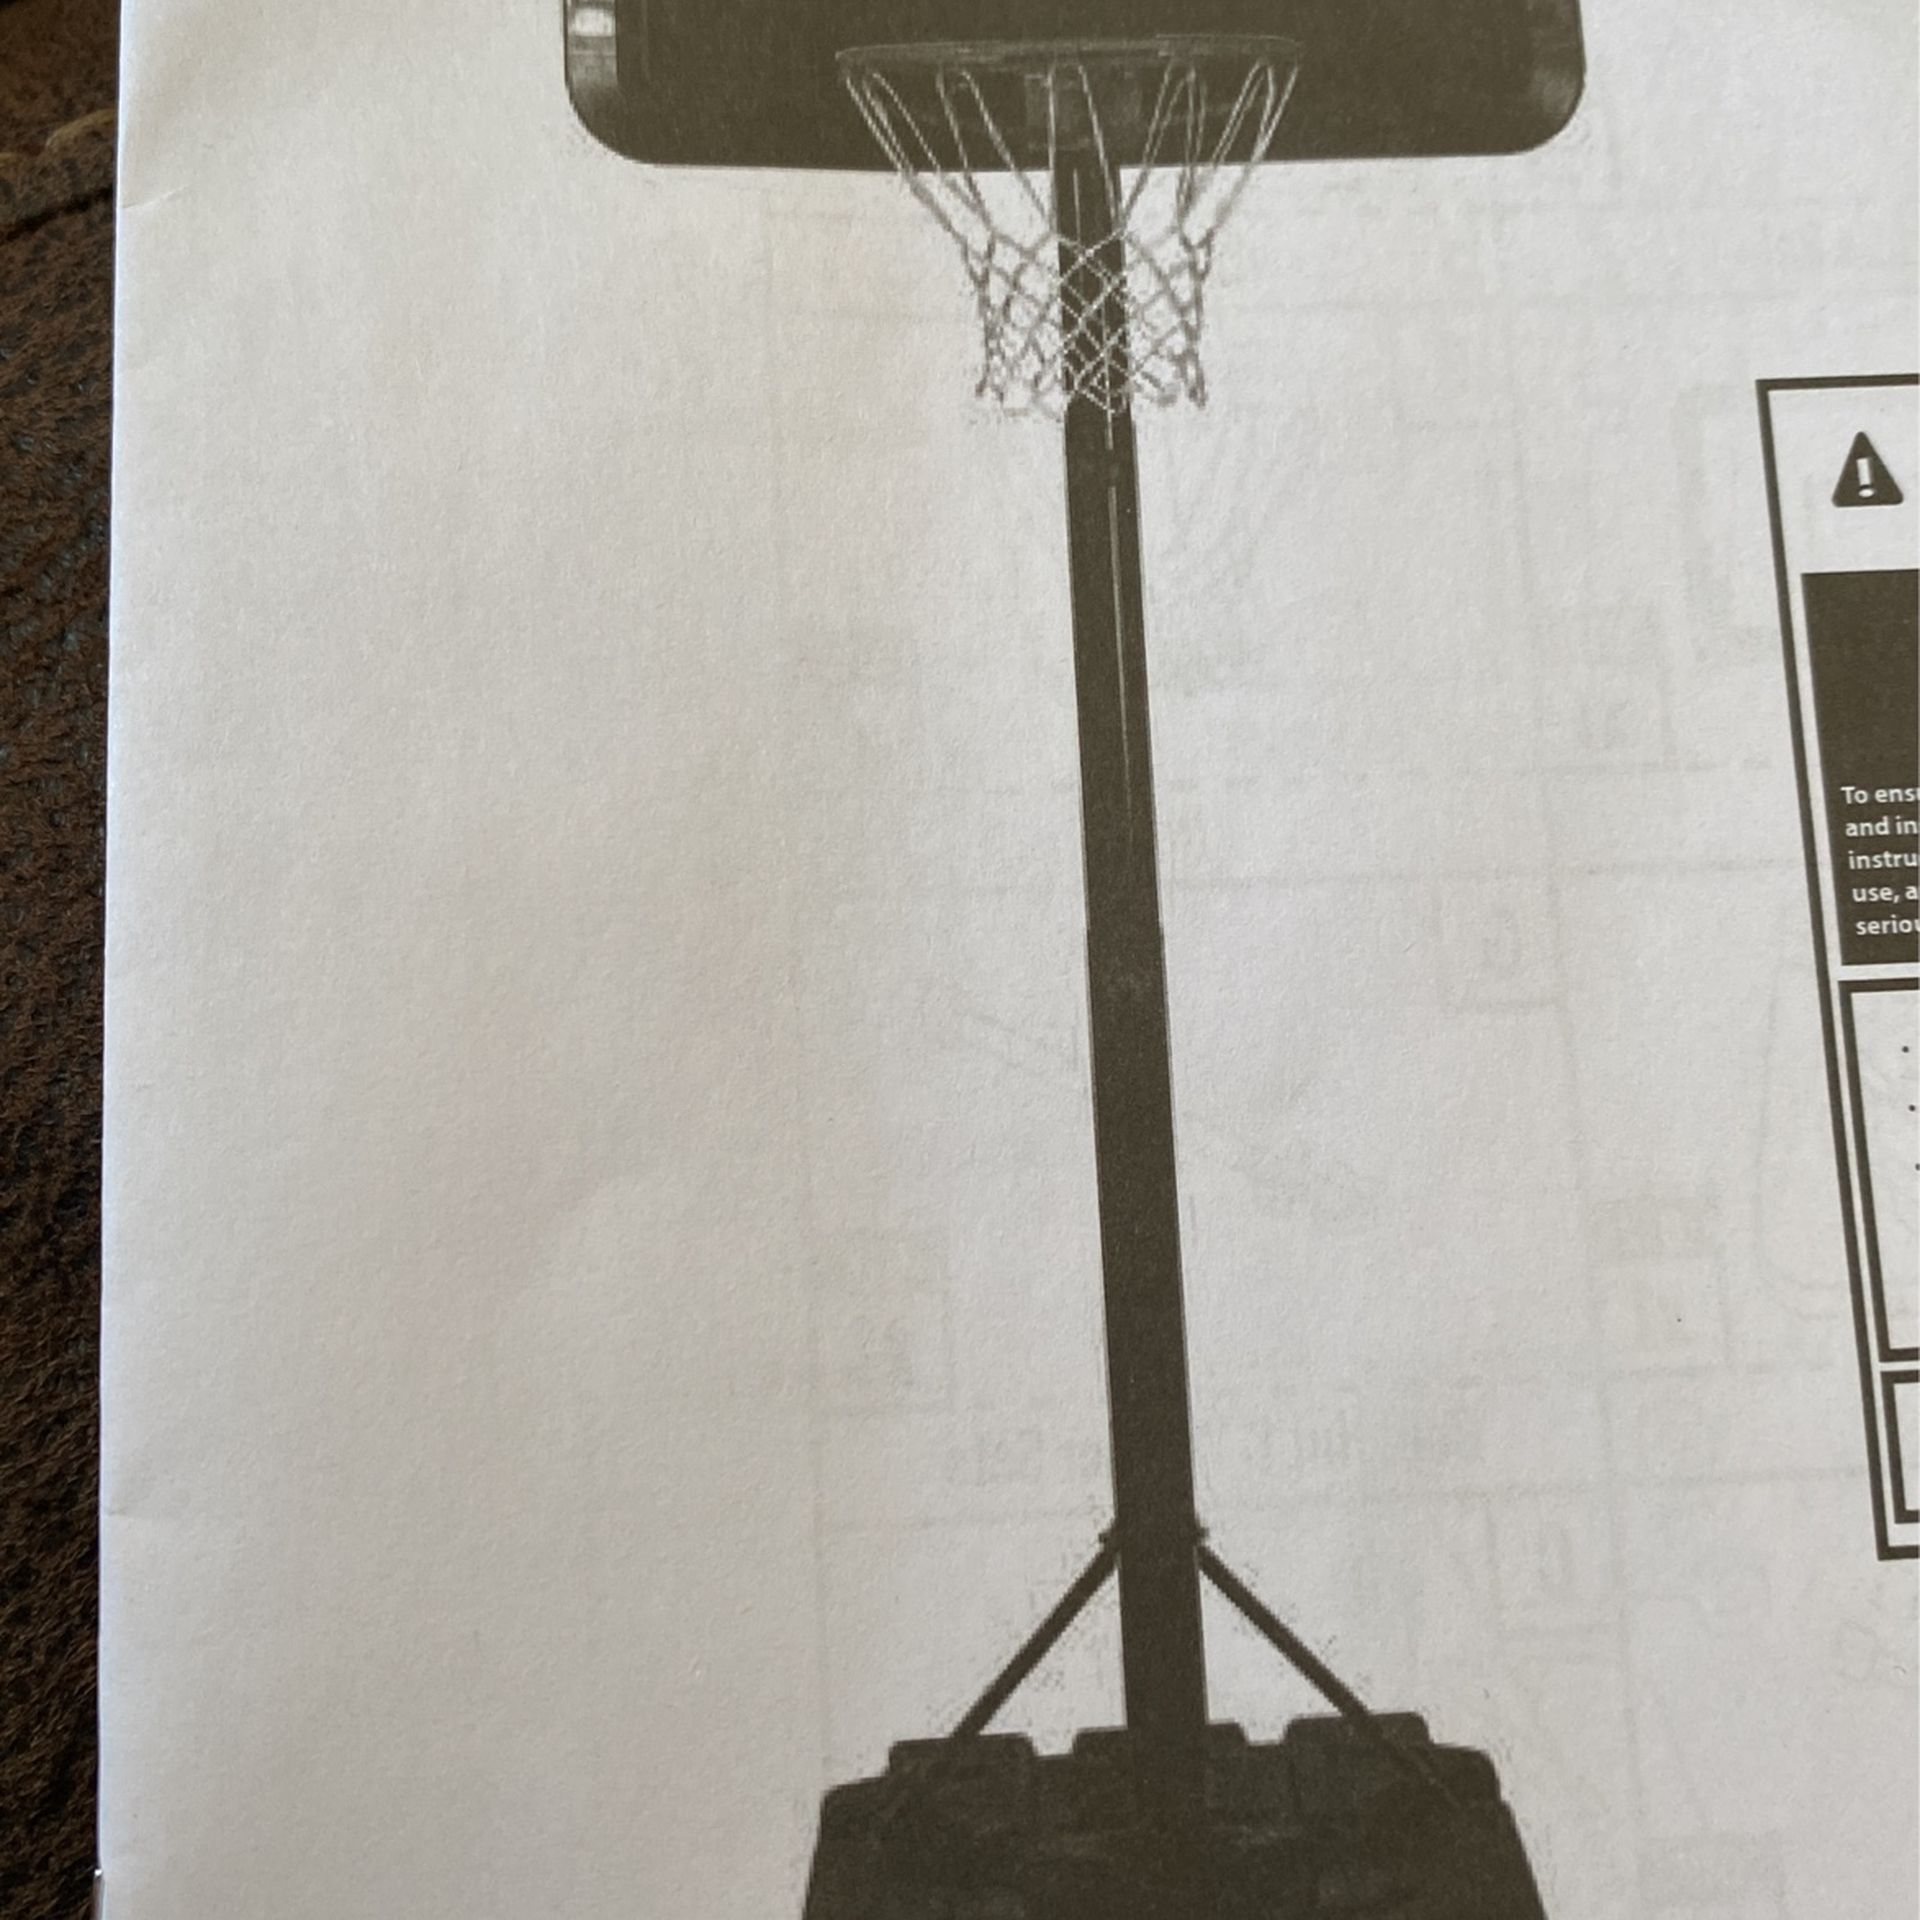 Gatorade Basketball Hoop